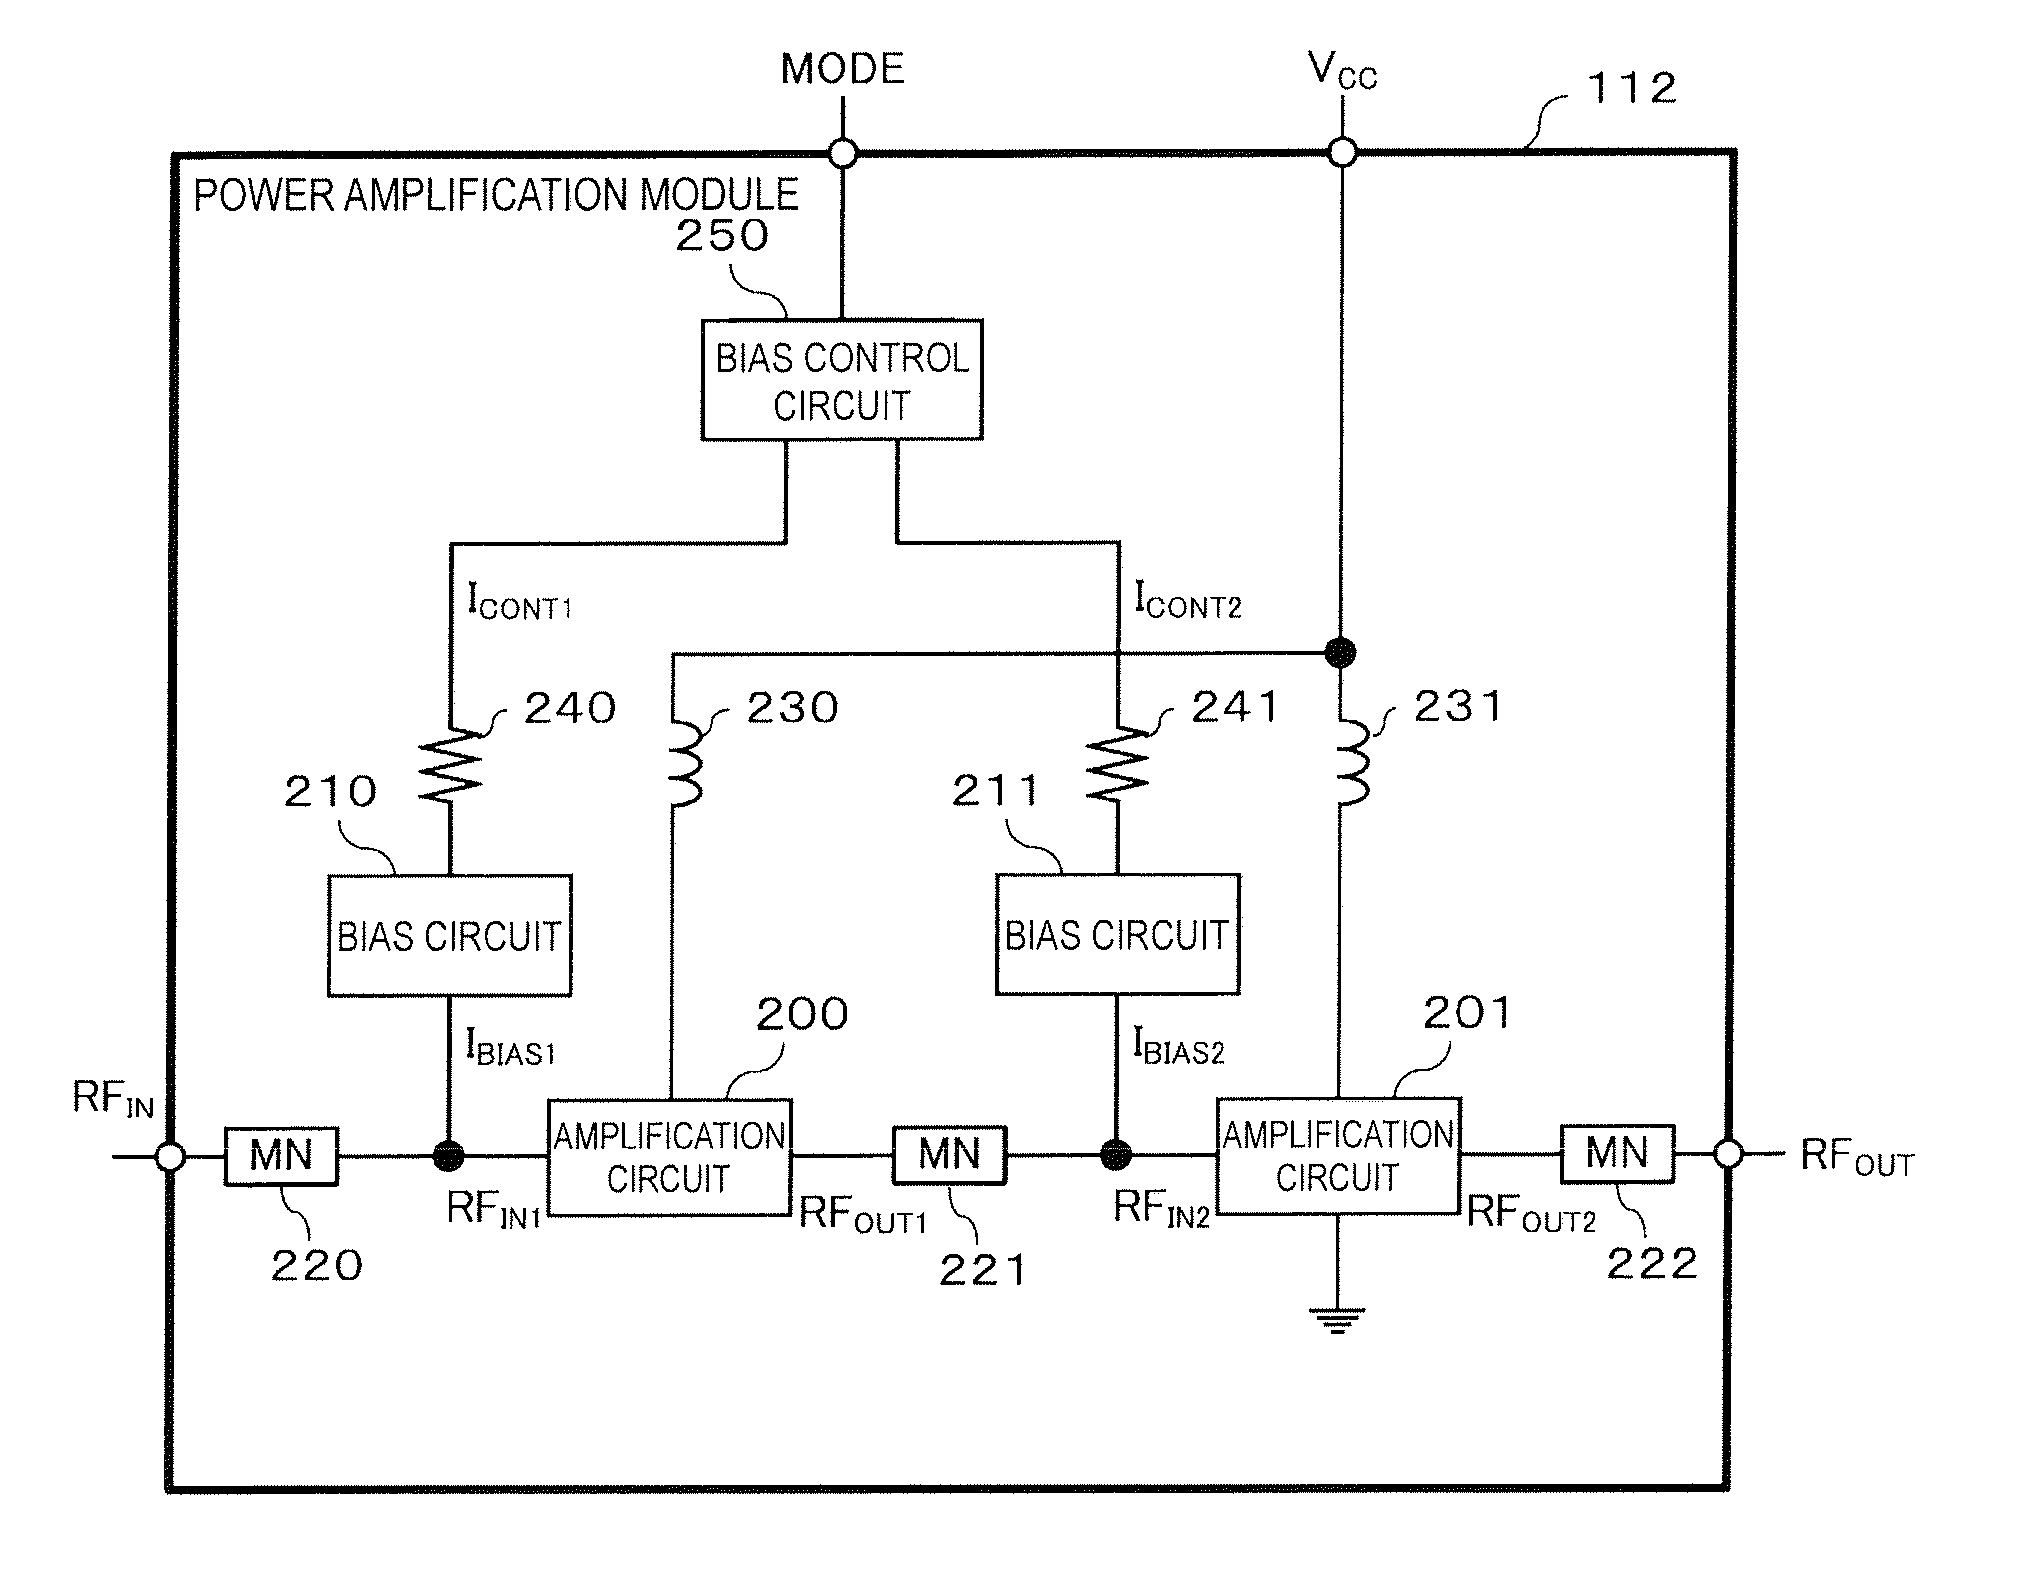 Power amplification module